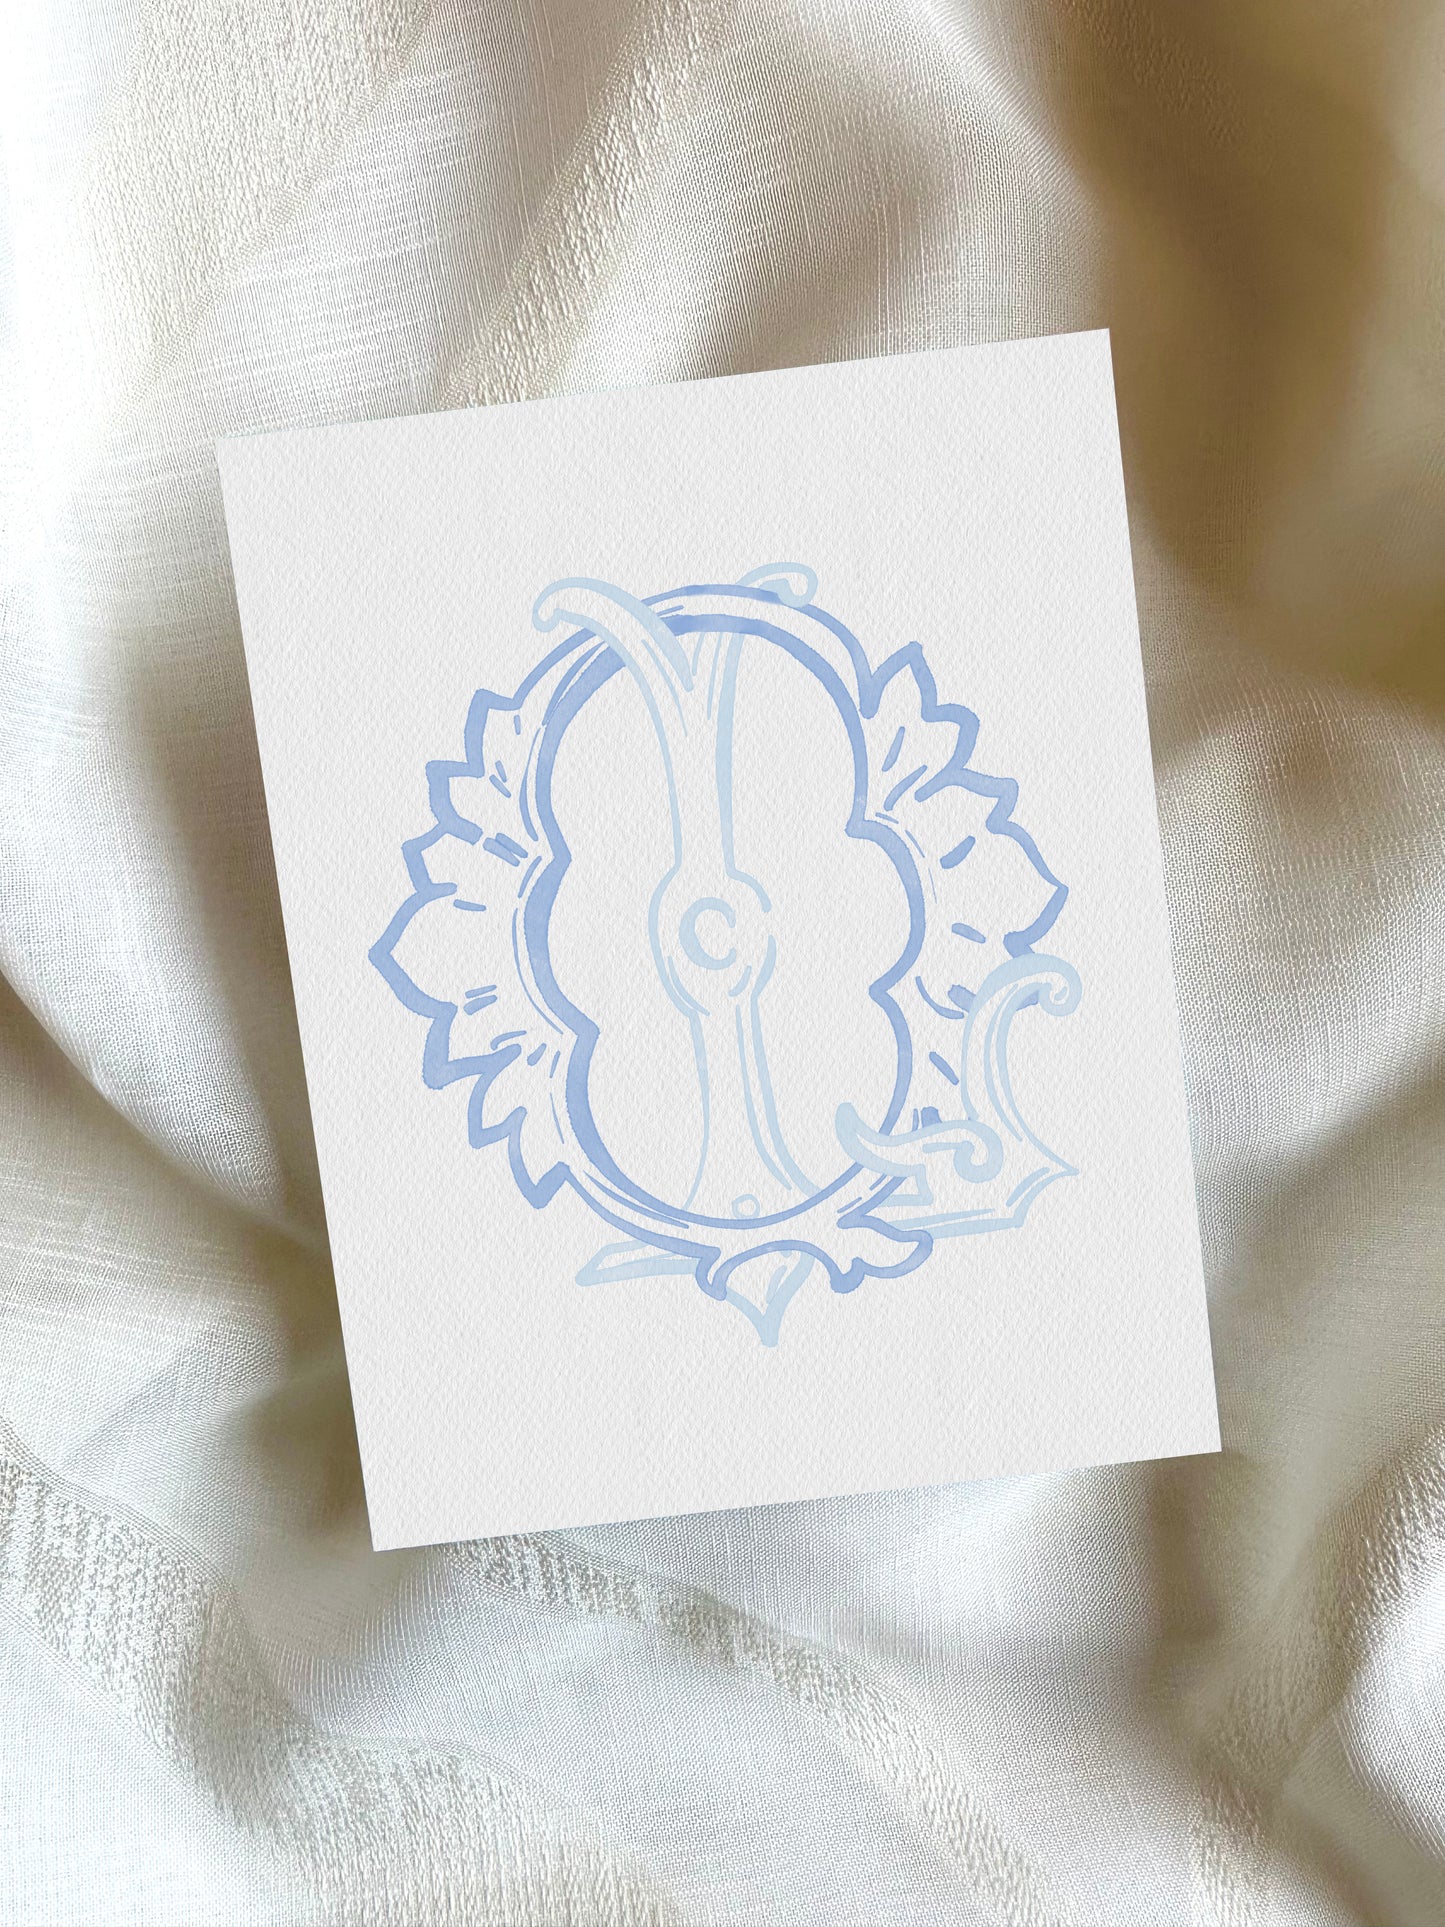 2 Letter Monogram with Letters LQ QL | Digital Download - Wedding Monogram SVG, Personal Logo, Wedding Logo for Wedding Invitations The Wedding Crest Lab